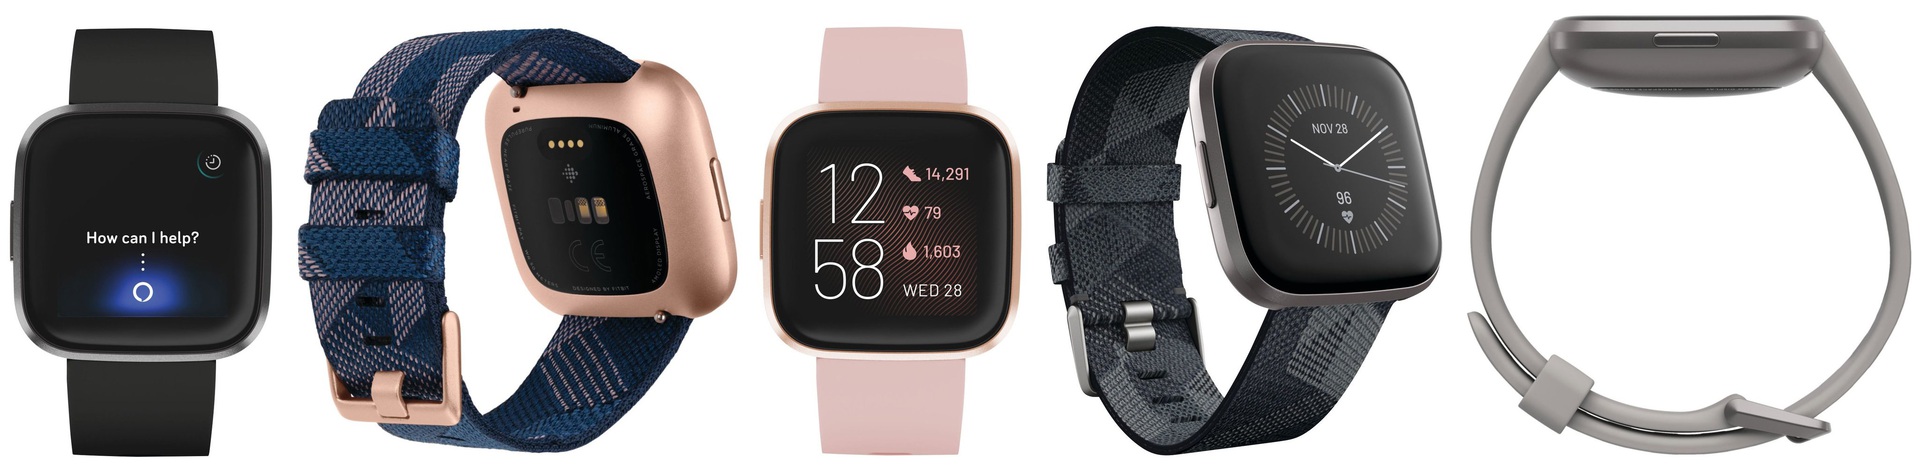 New Fitbit Versa Smartwatch renders showing five units side-by-side. 